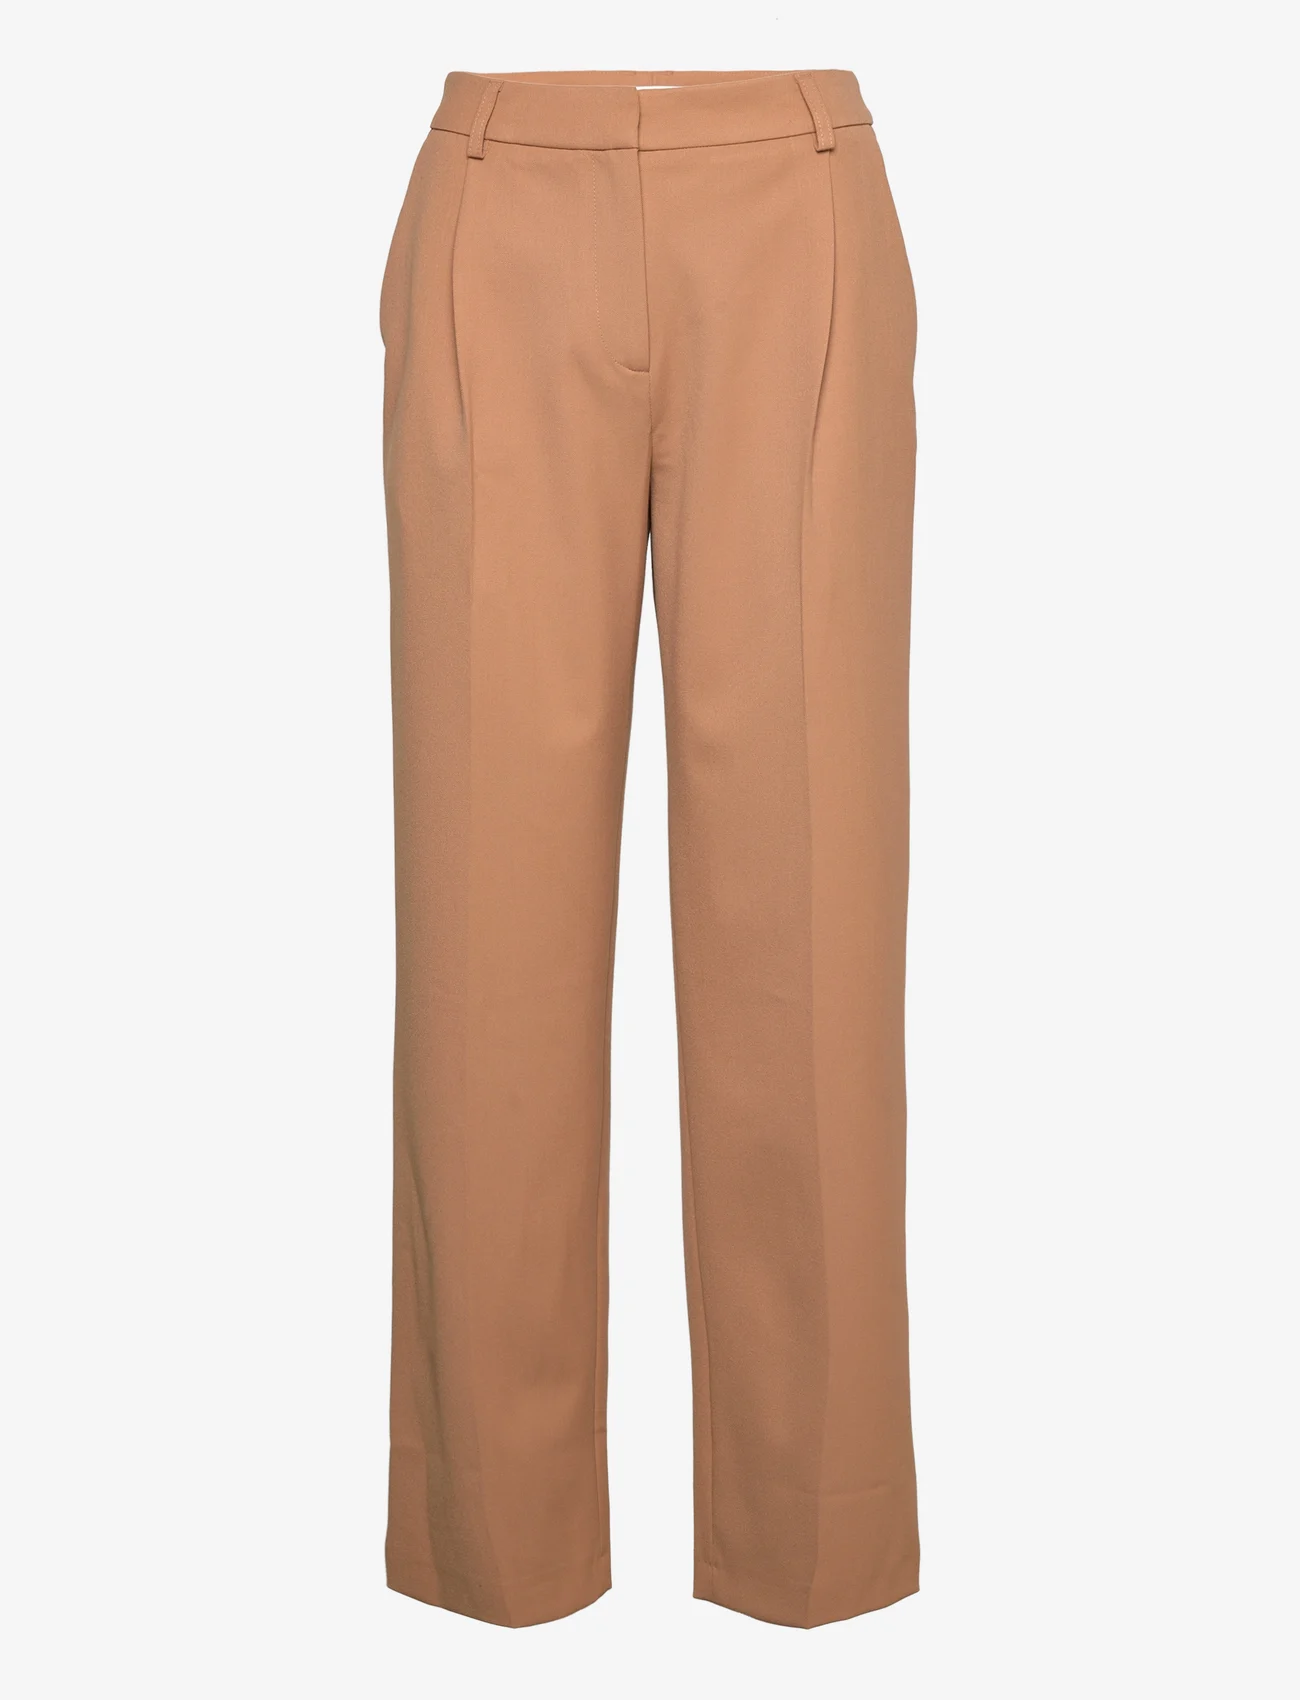 Samsøe Samsøe - Paola trousers 13103 - puvunhousut - brown sugar - 0